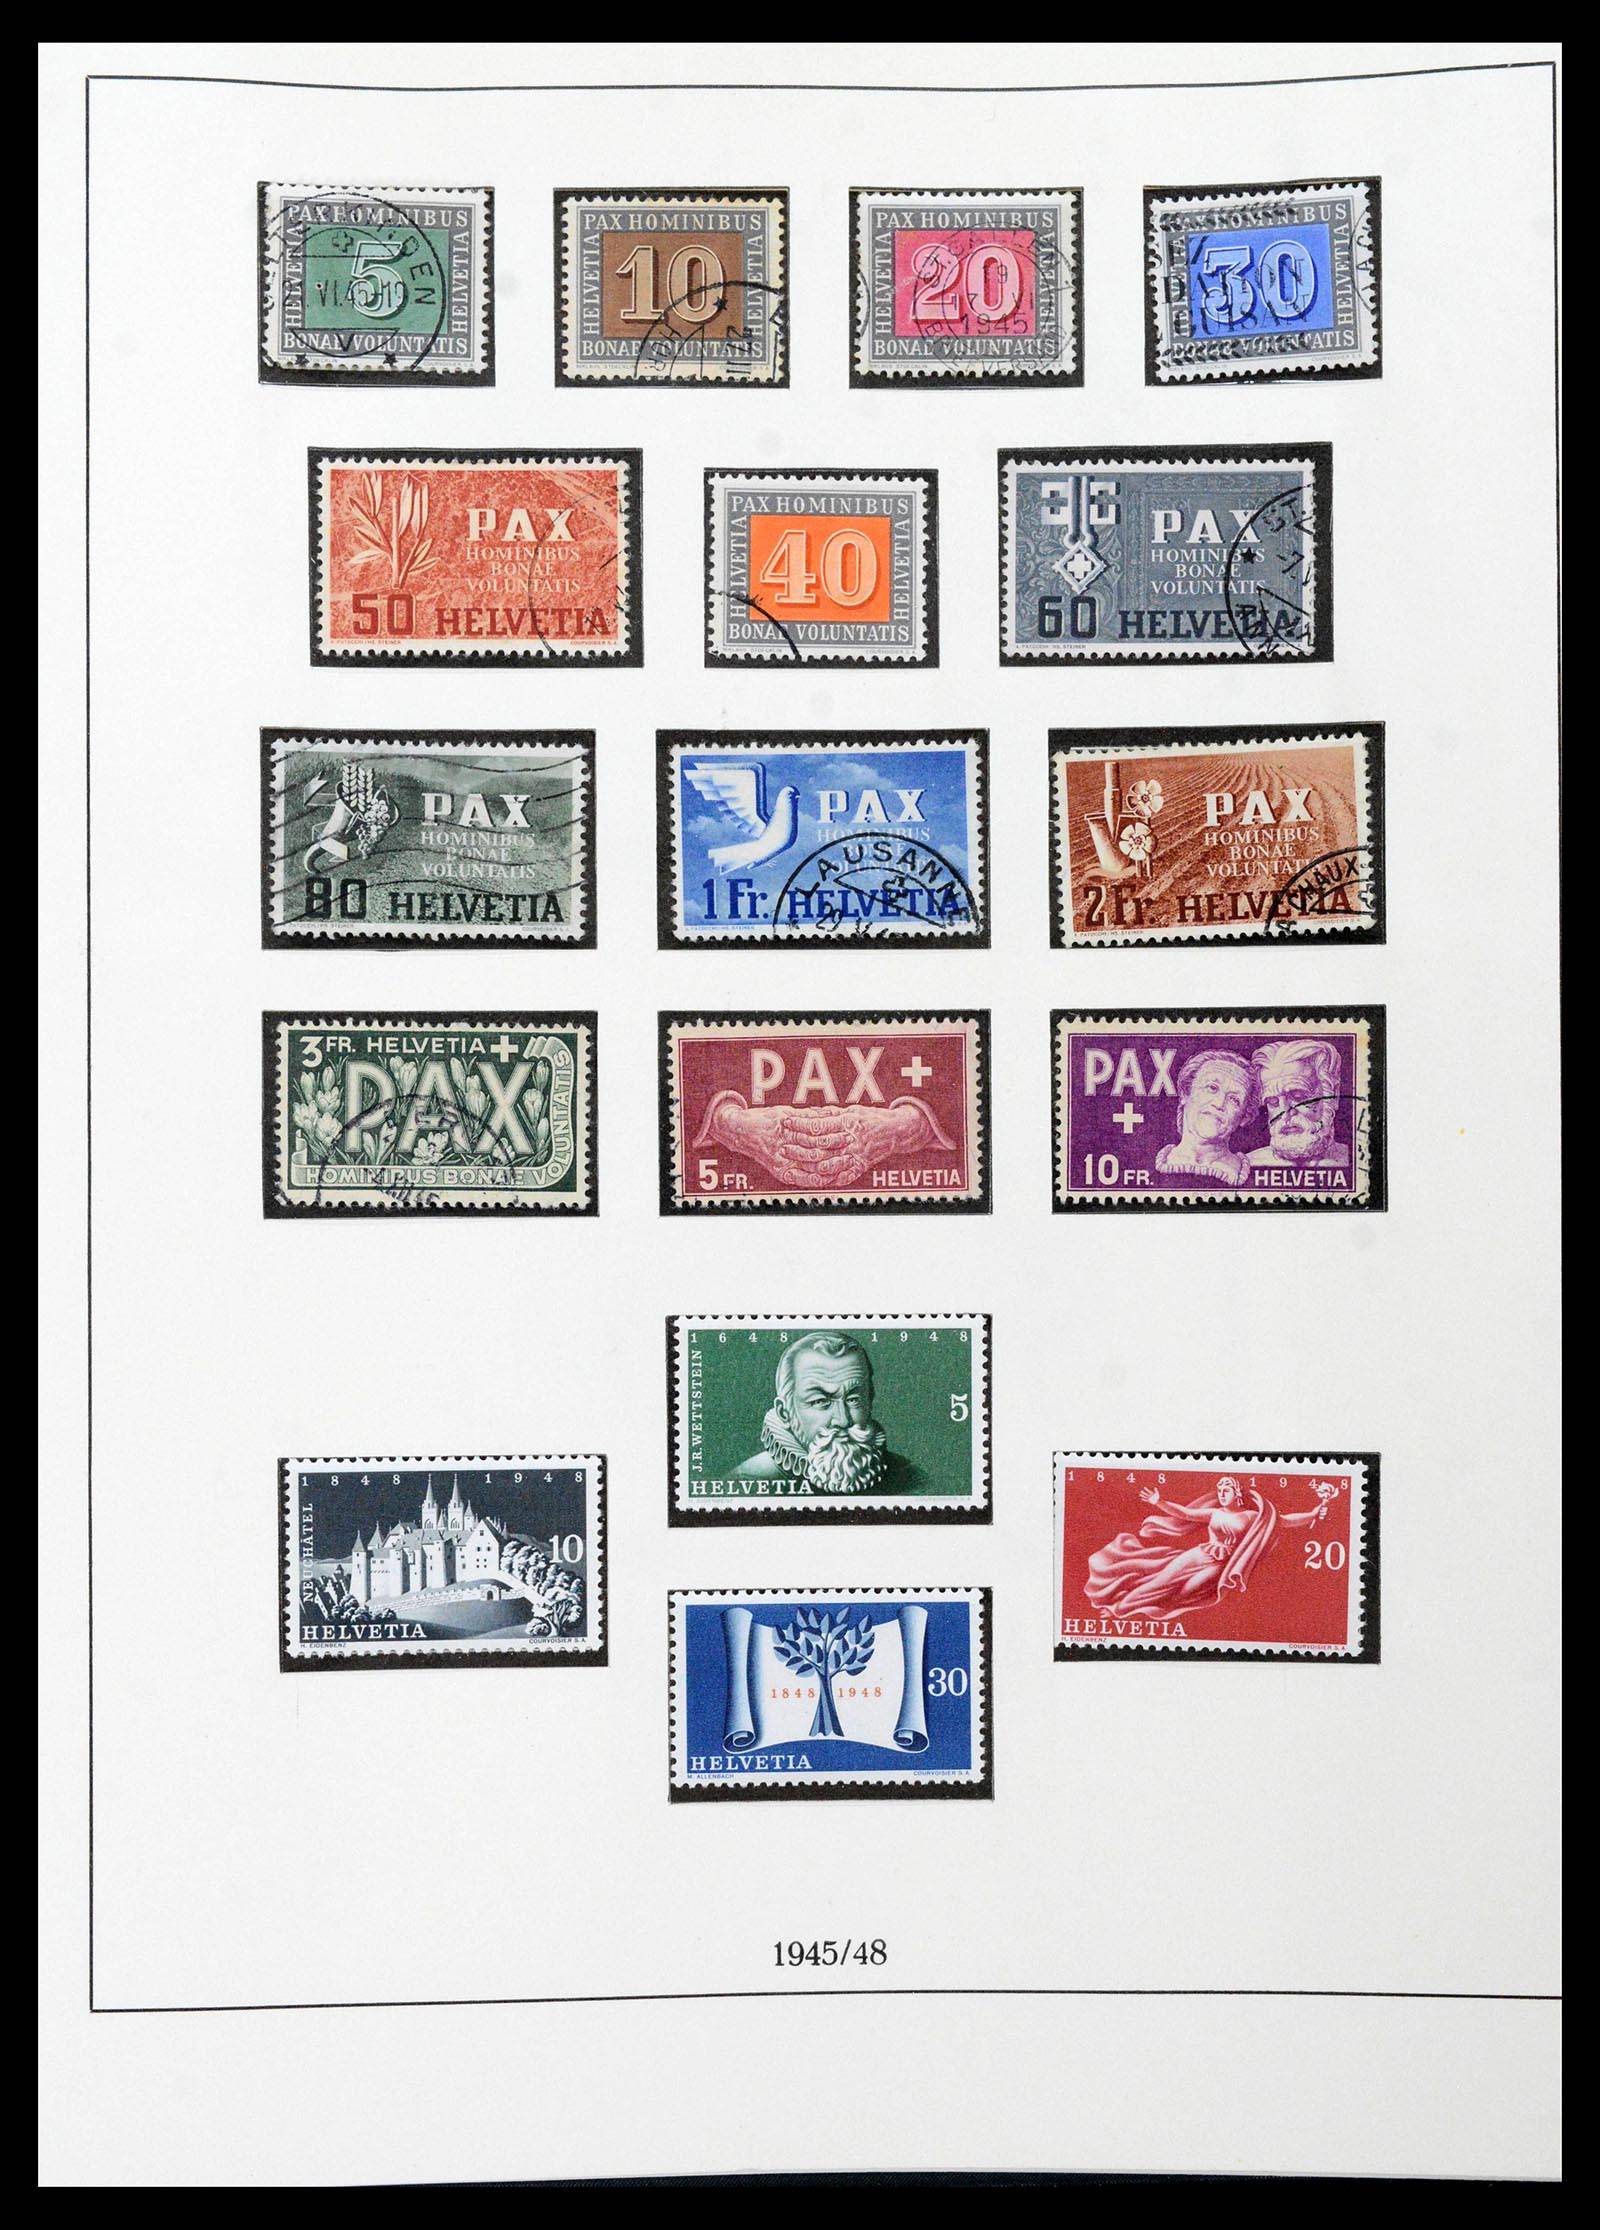 39235 0040 - Stamp collection 39235 Switzerland 1843-1960.